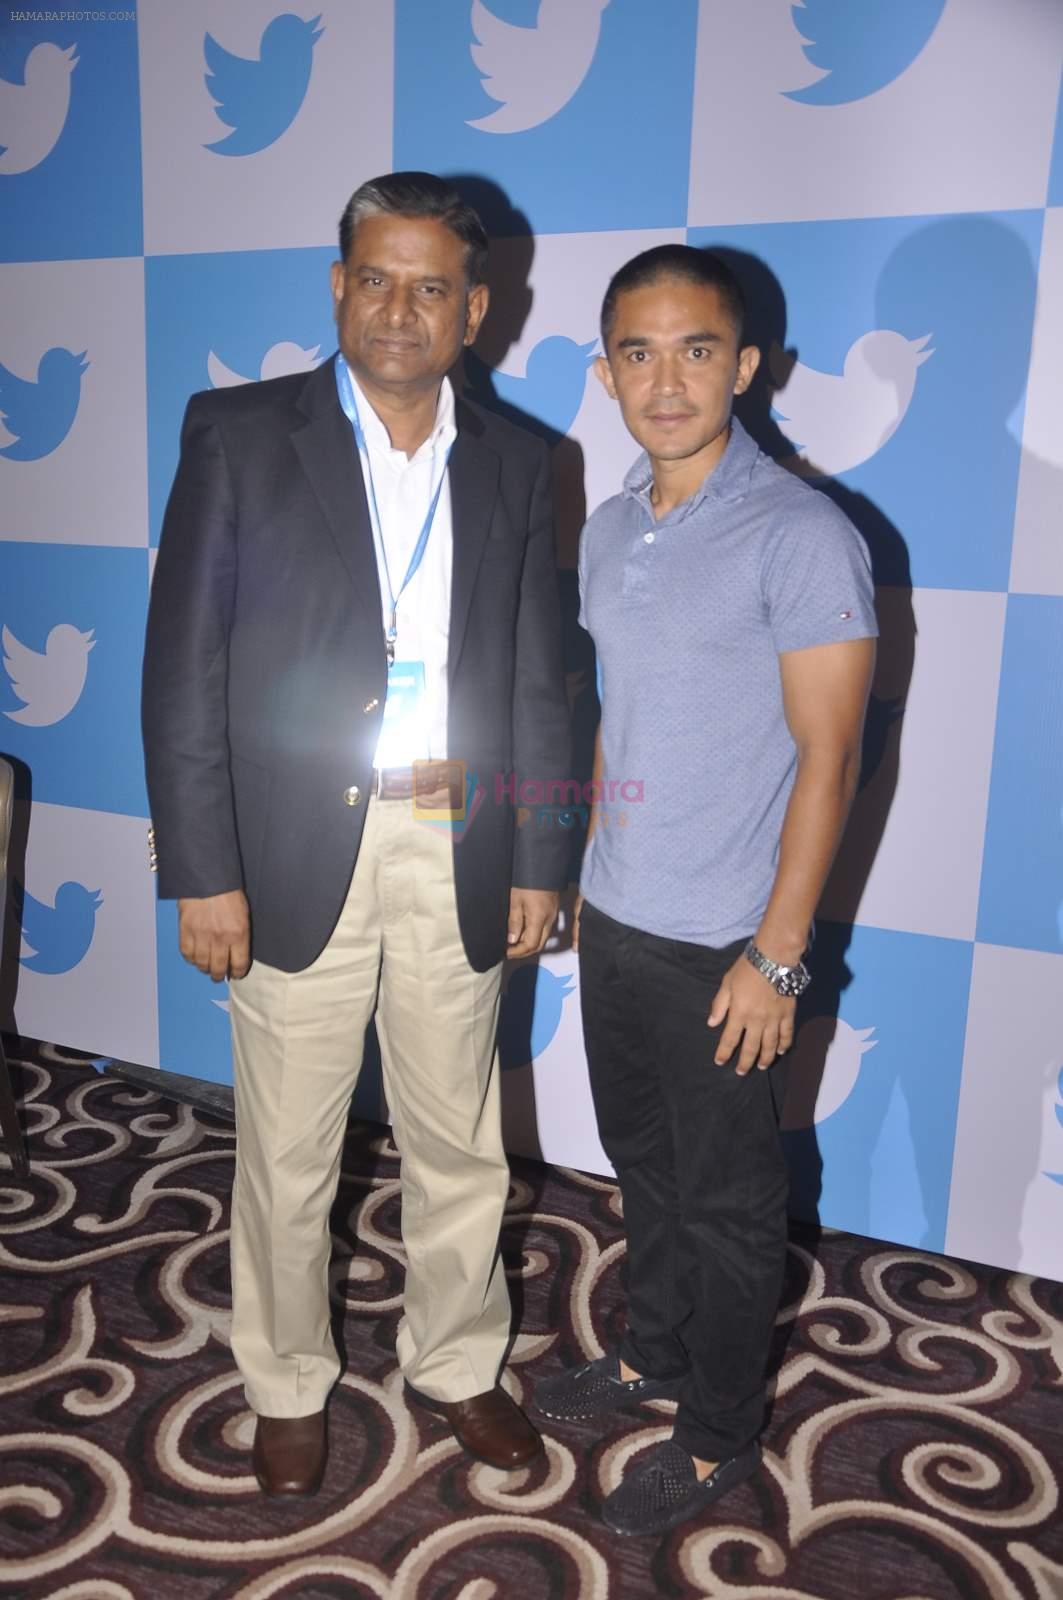 Sunil chetri at twitter India Event on 30th June 2015